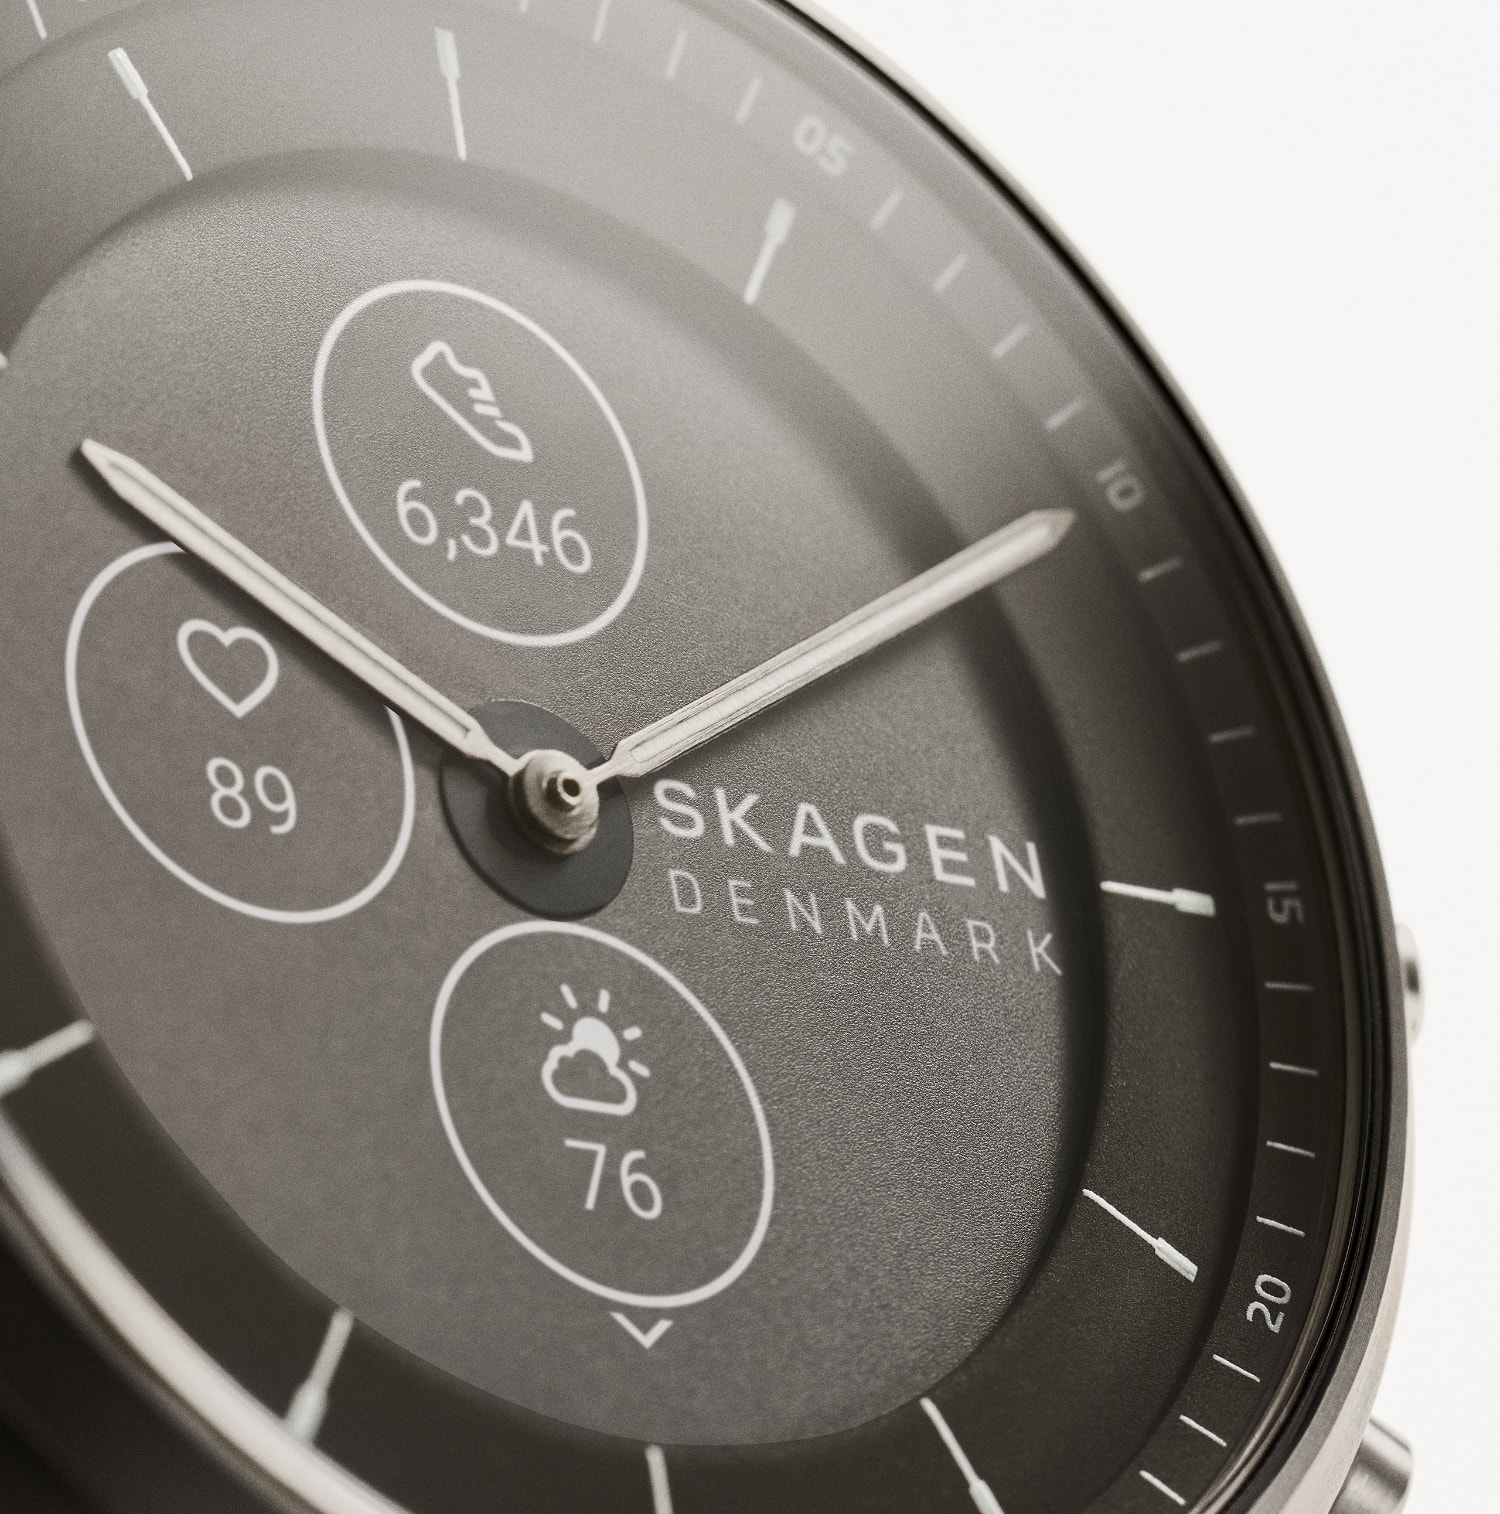 Skagen jorn gen 6 smartwatch close up